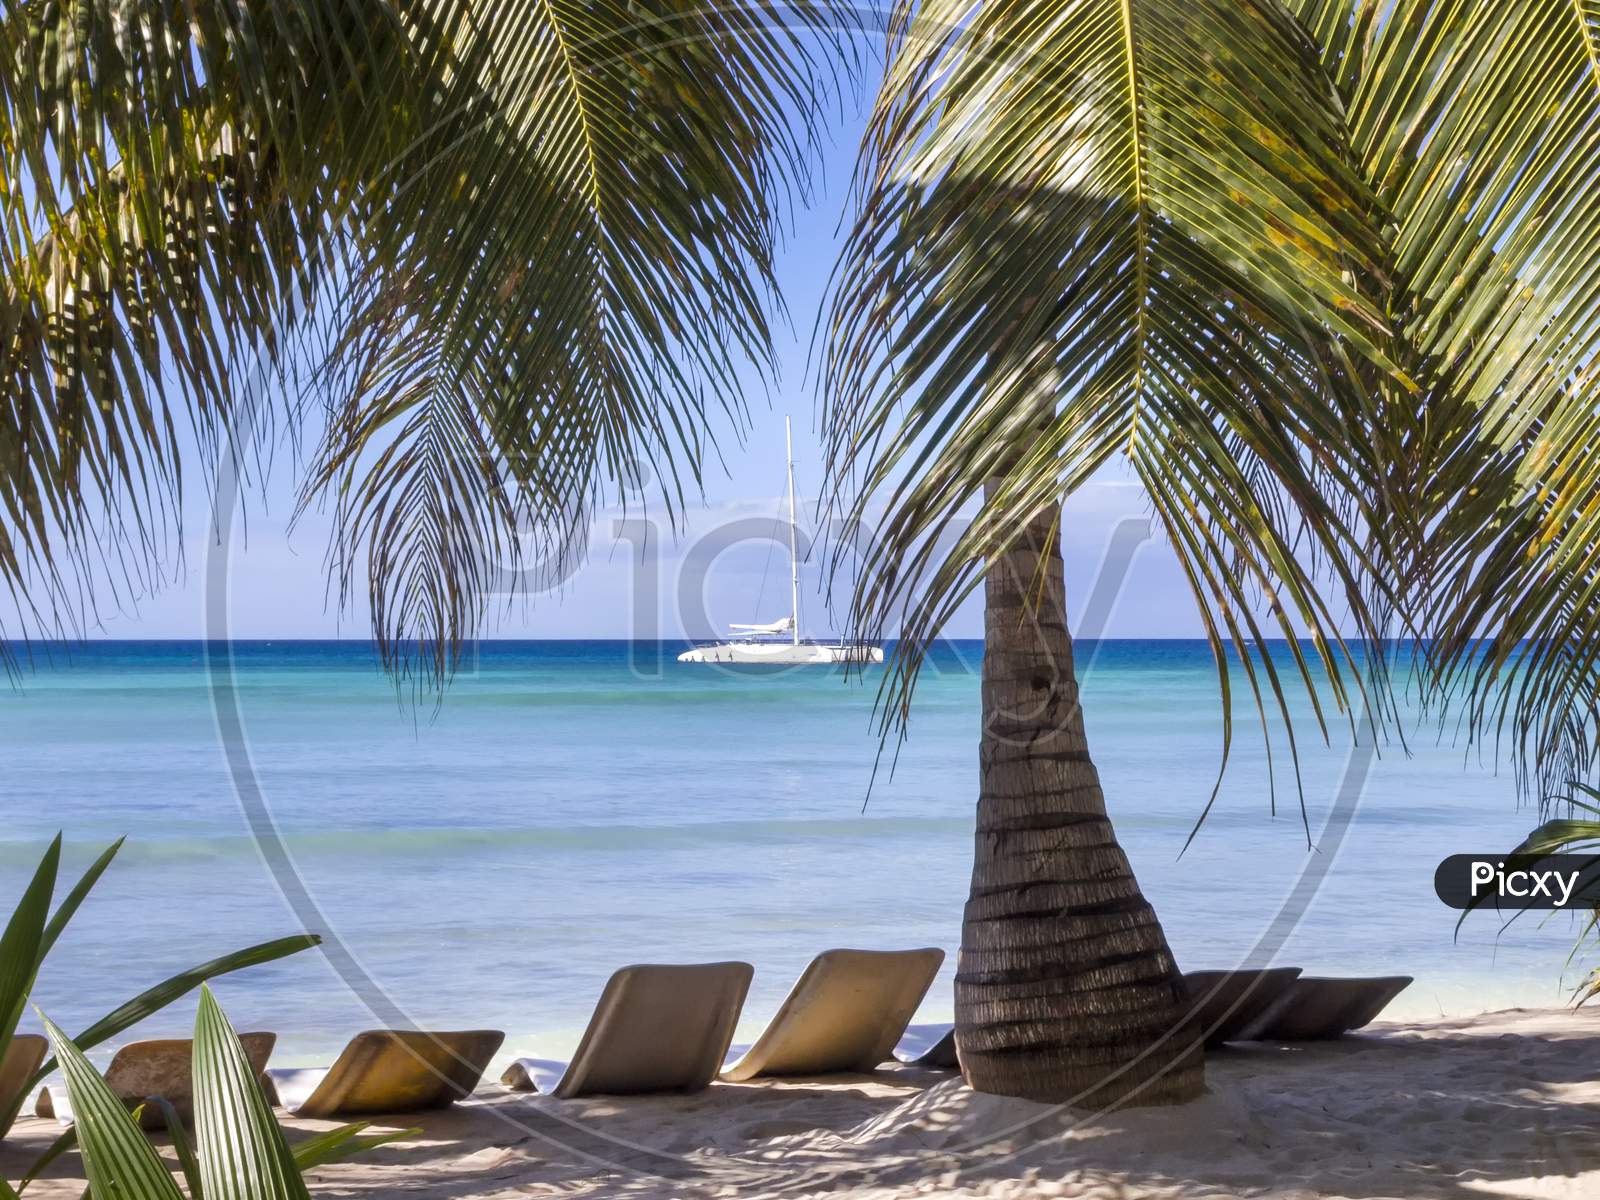 Relaxing sun lounges on a Caribbean beach